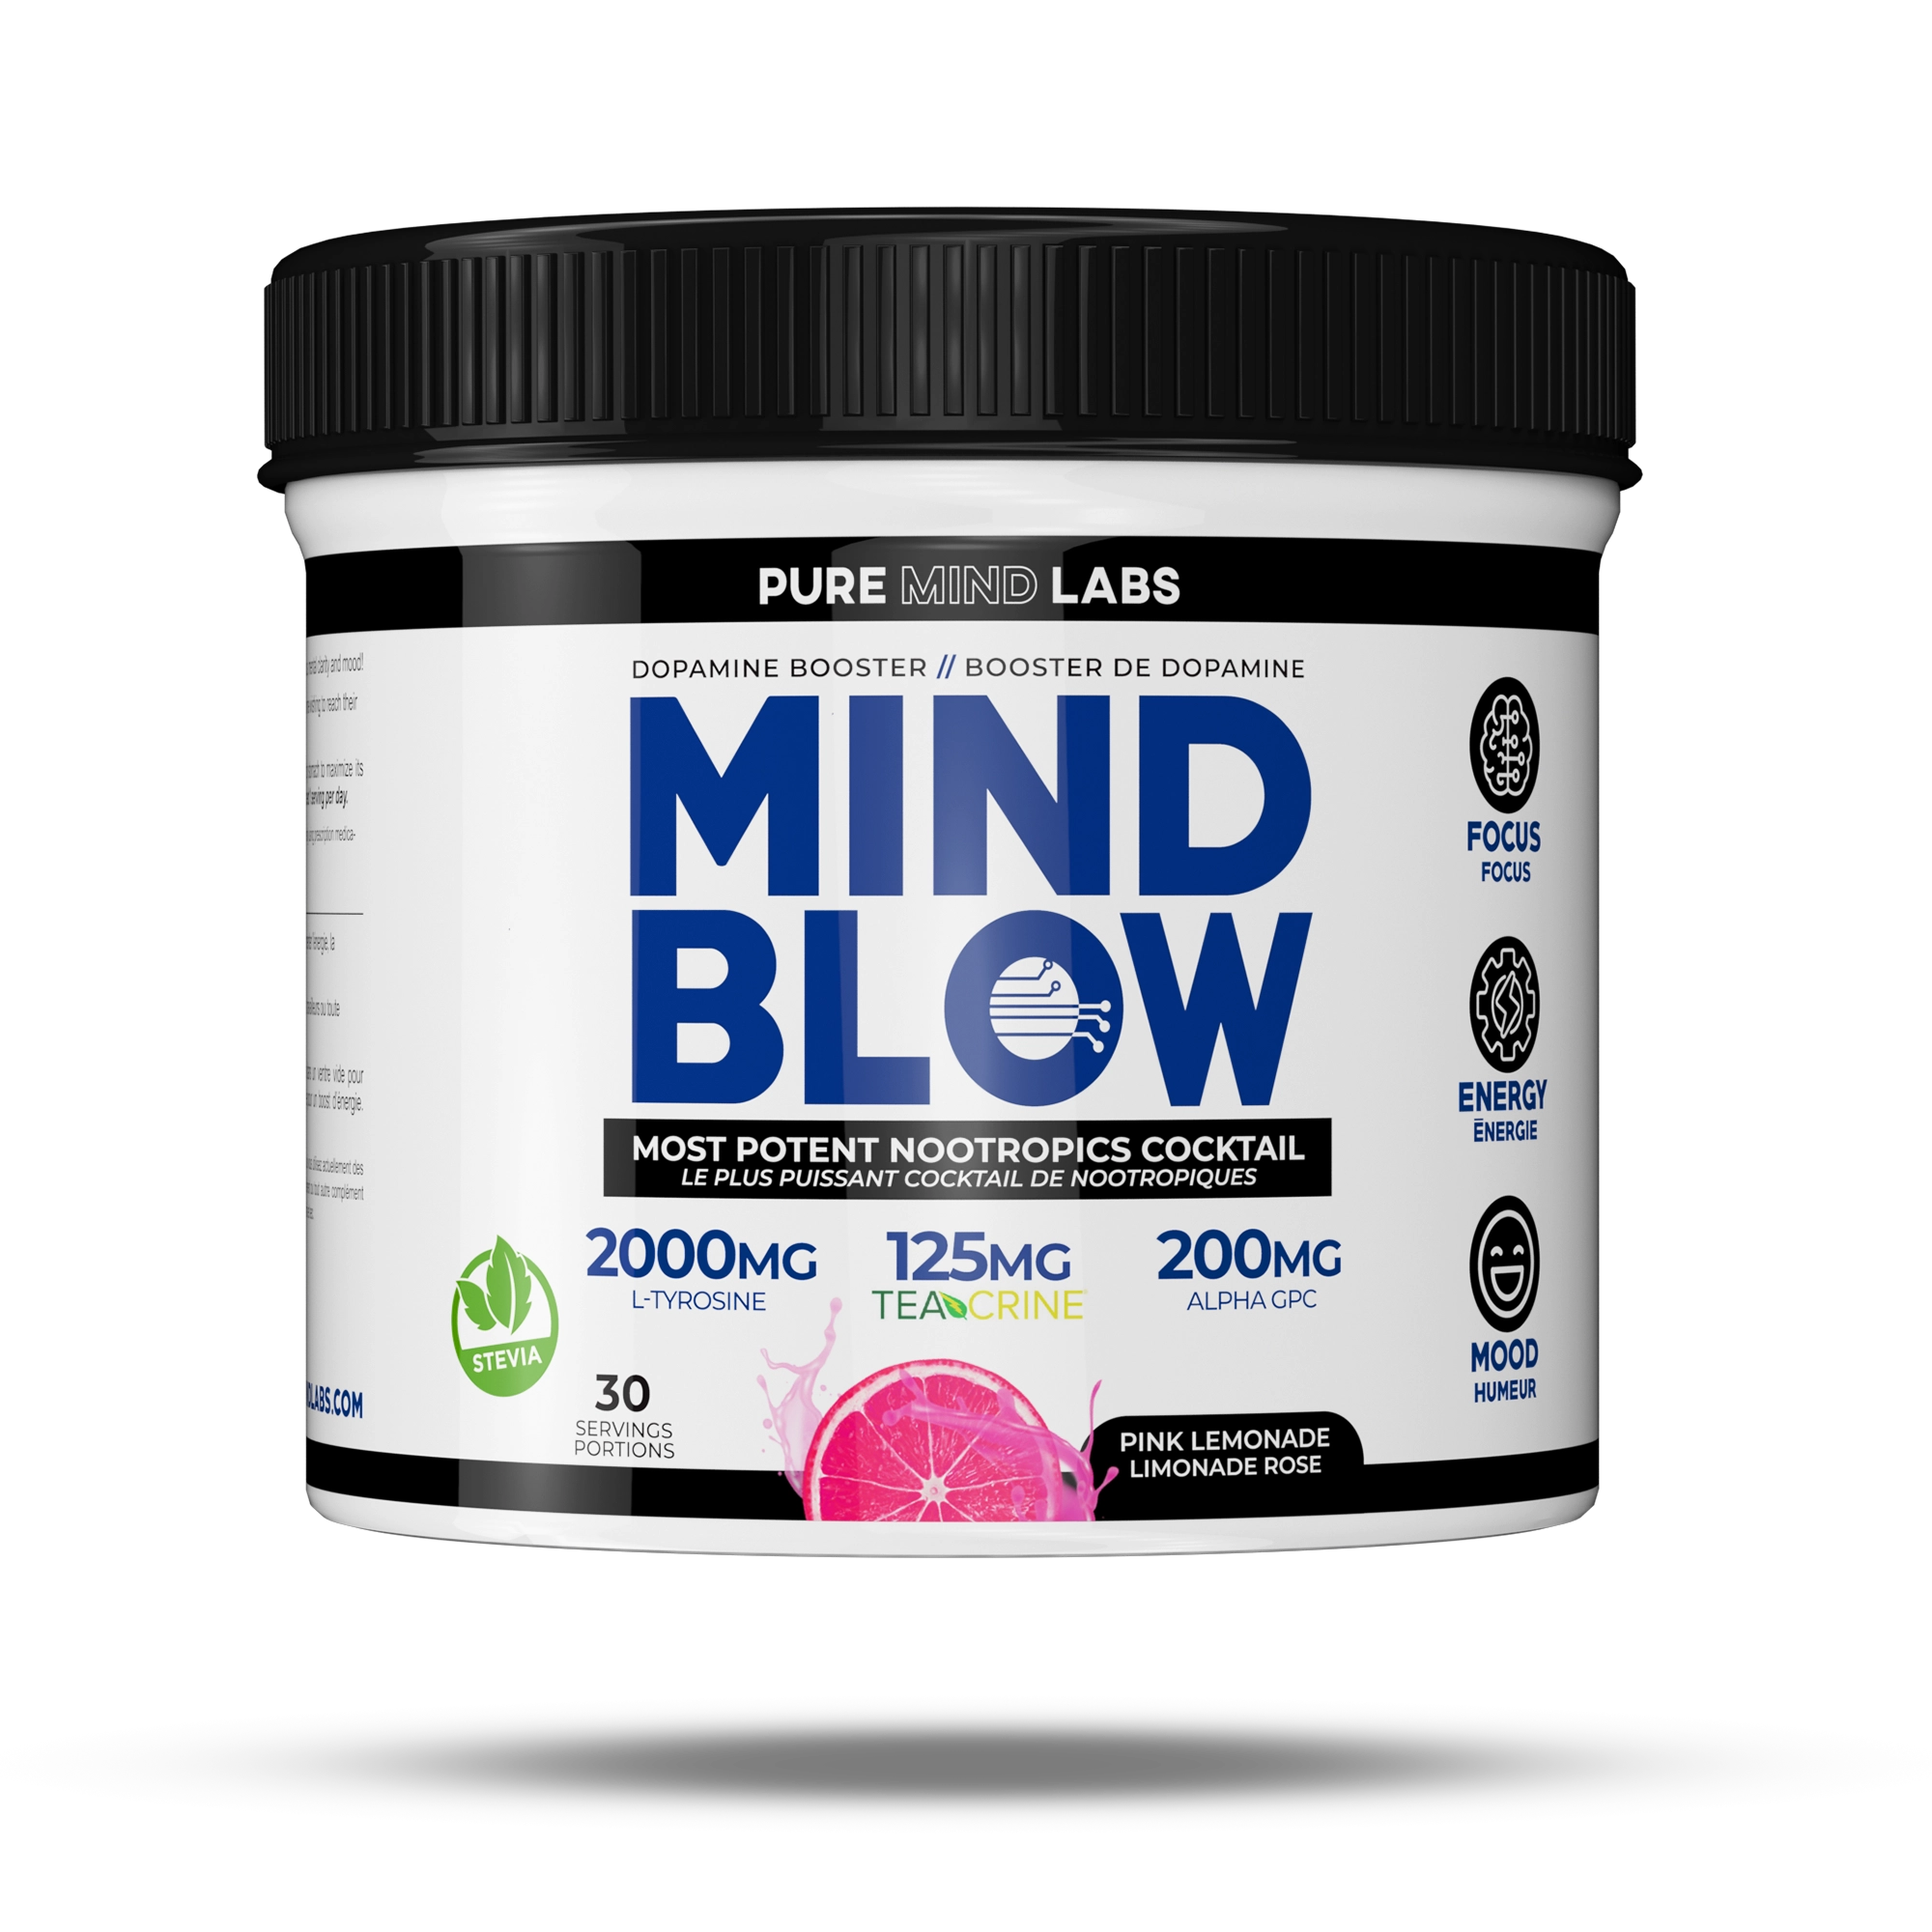 Mind Blow Nootropic Pre-Workout (30 servings) mind-blow-nootropics-cocktail-30-servings Nootropic Pink Lemonade Mind Blow